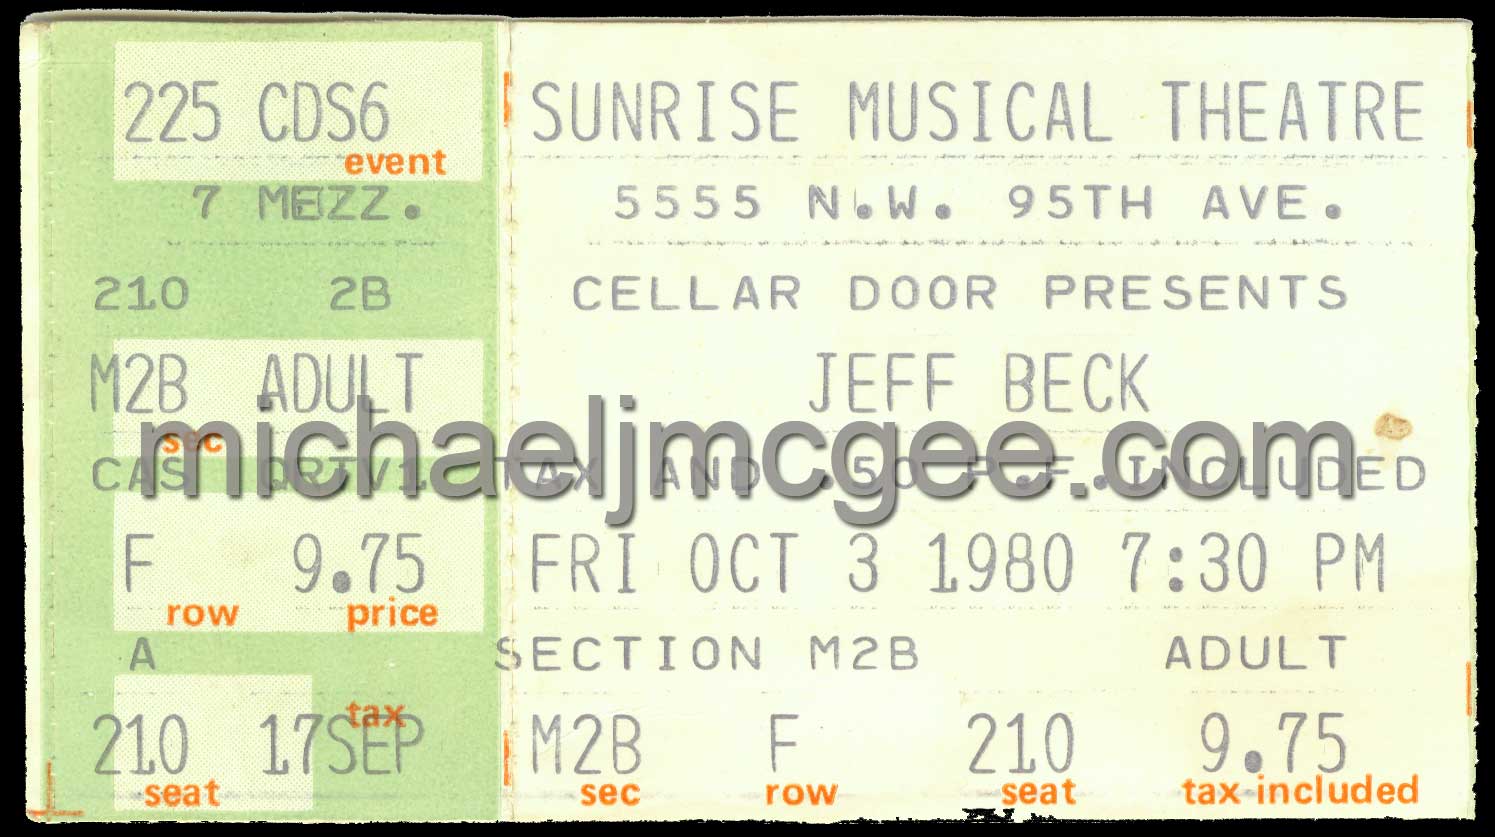 Jeff Beck / michaeljmcgee.com